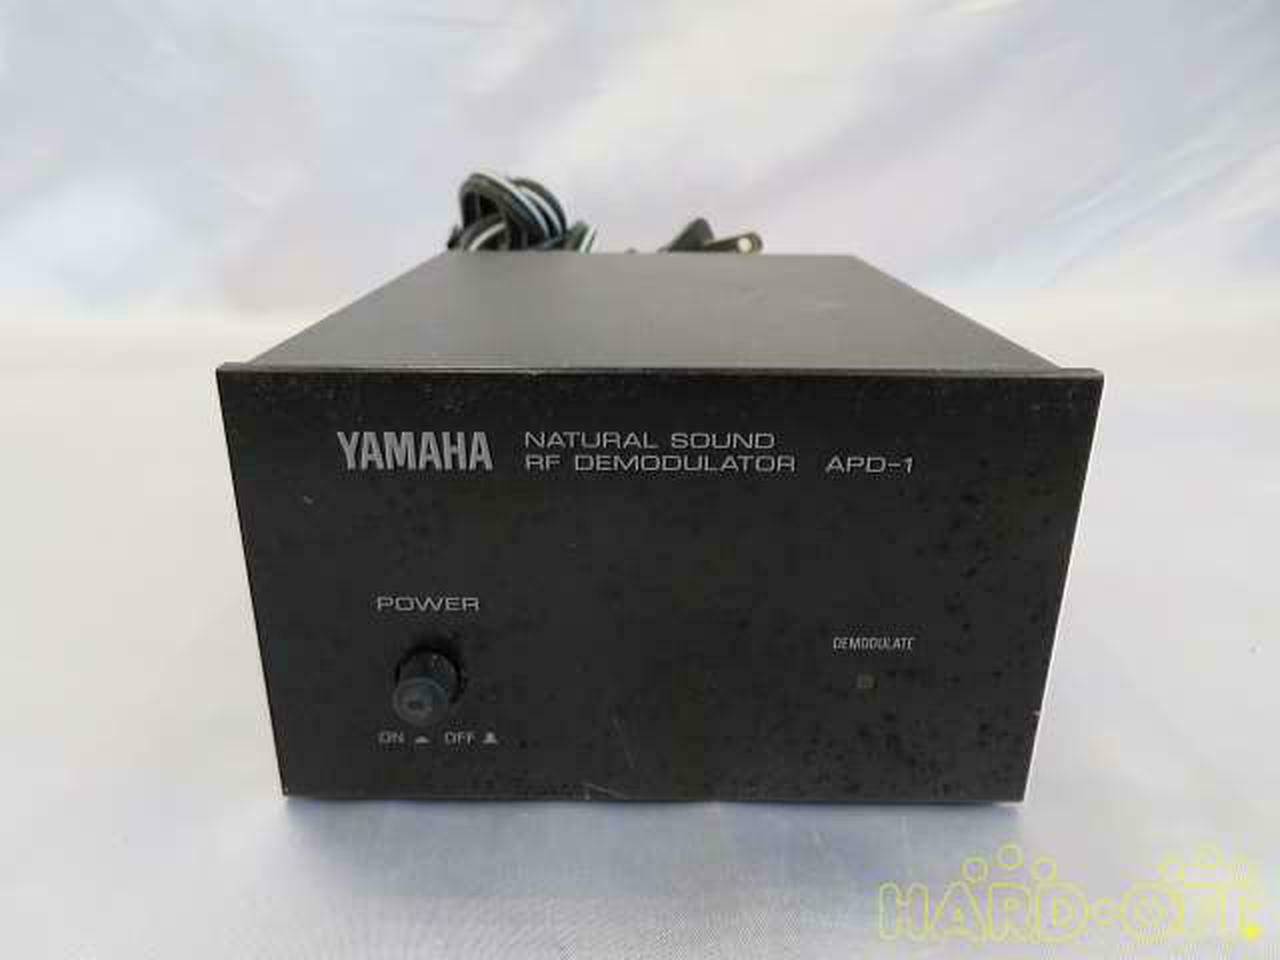 Yamaha<apd-1>natural Sound Rf Demodulator Working Used From Japan ✈fedex✈